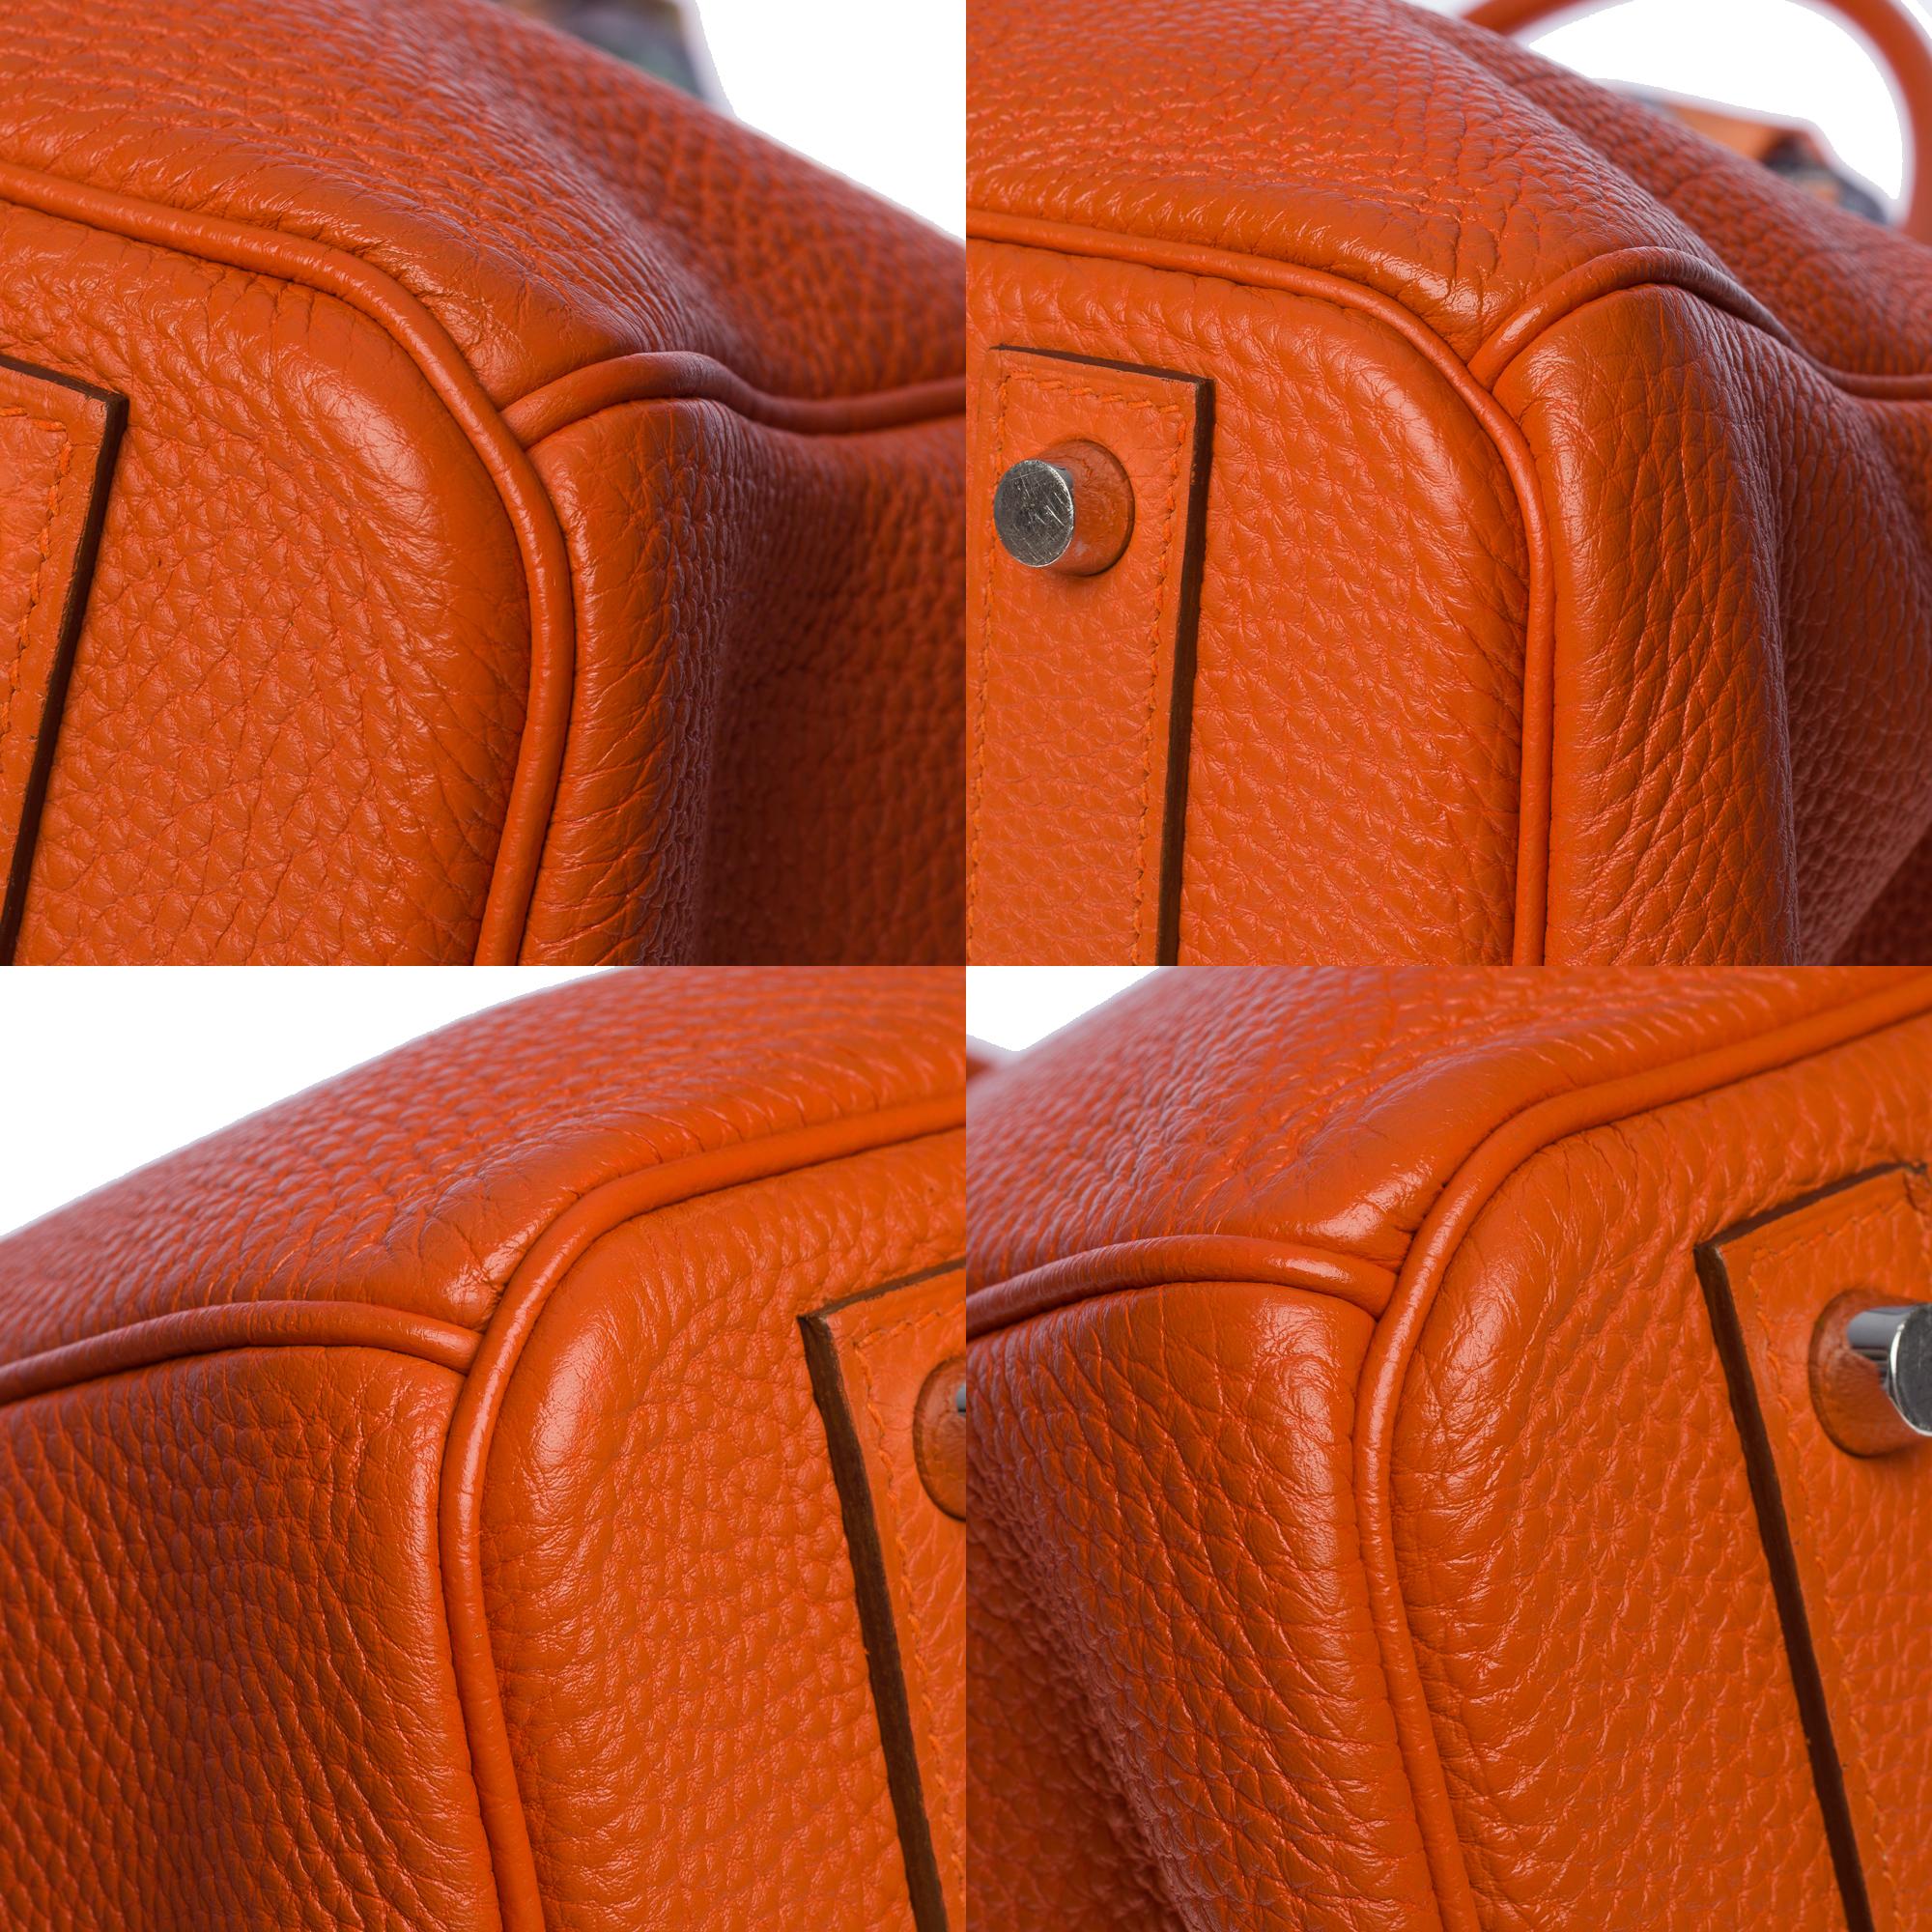 Stunning Hermes Birkin 40cm handbag in Orange Terre battue Togo leather, SHW 7